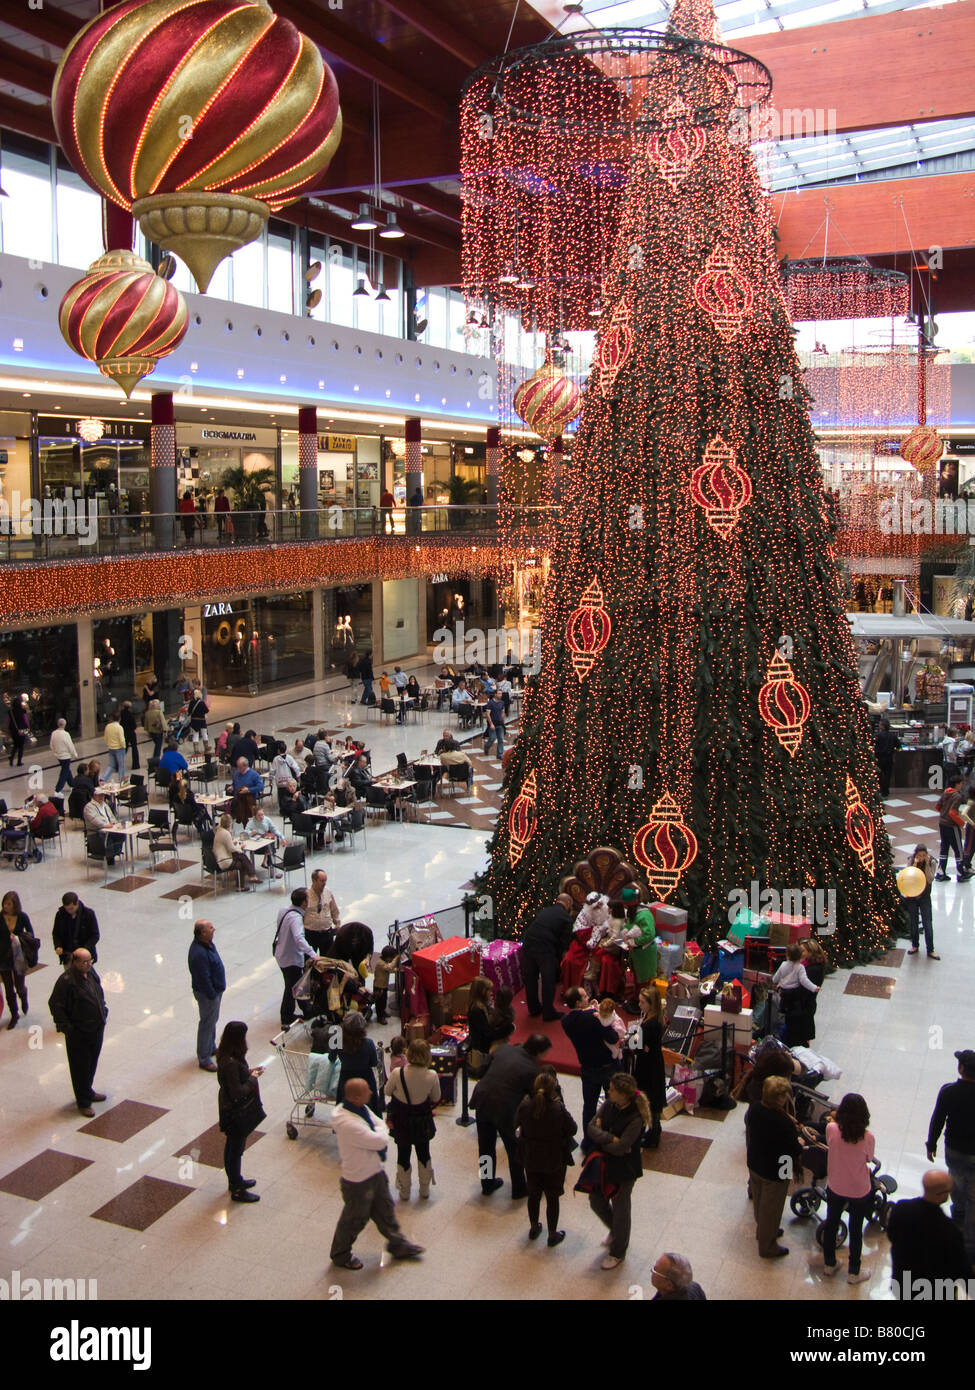 Christmas tree in shopping center -Fotos und -Bildmaterial in hoher  Auflösung – Alamy